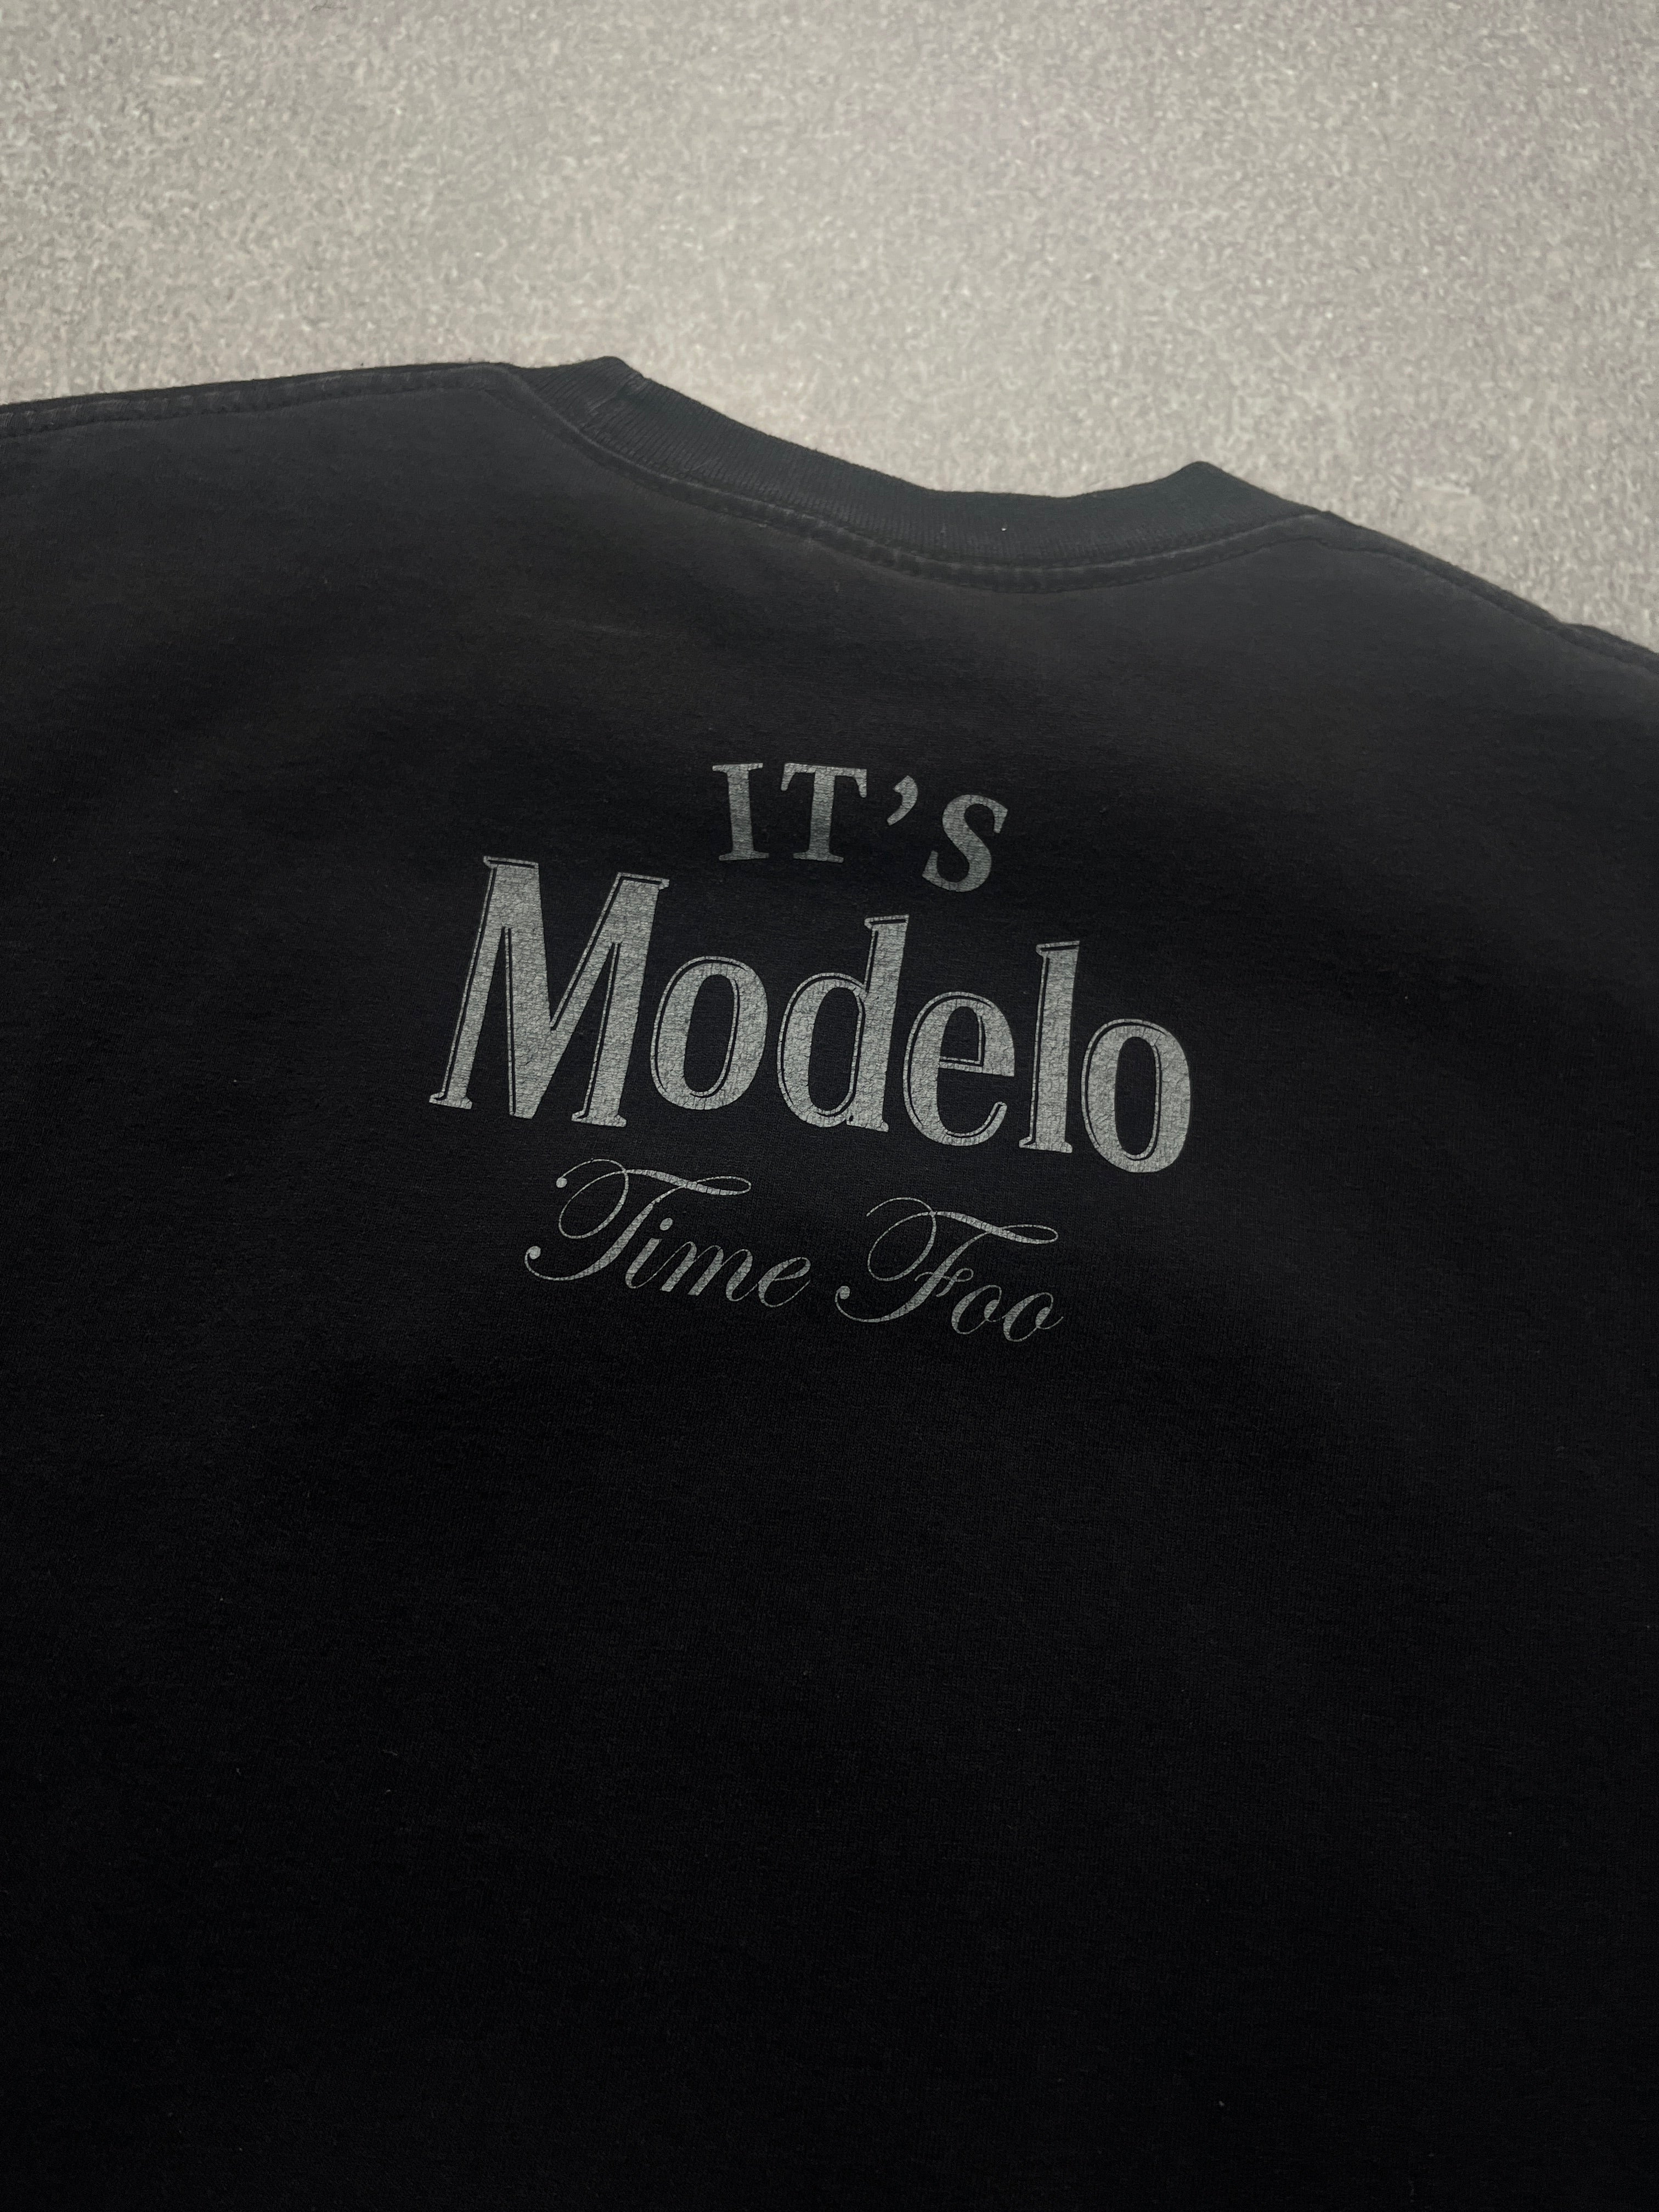 Vintage Modelo T Shirt Black // X-Large - RHAGHOUSE VINTAGE